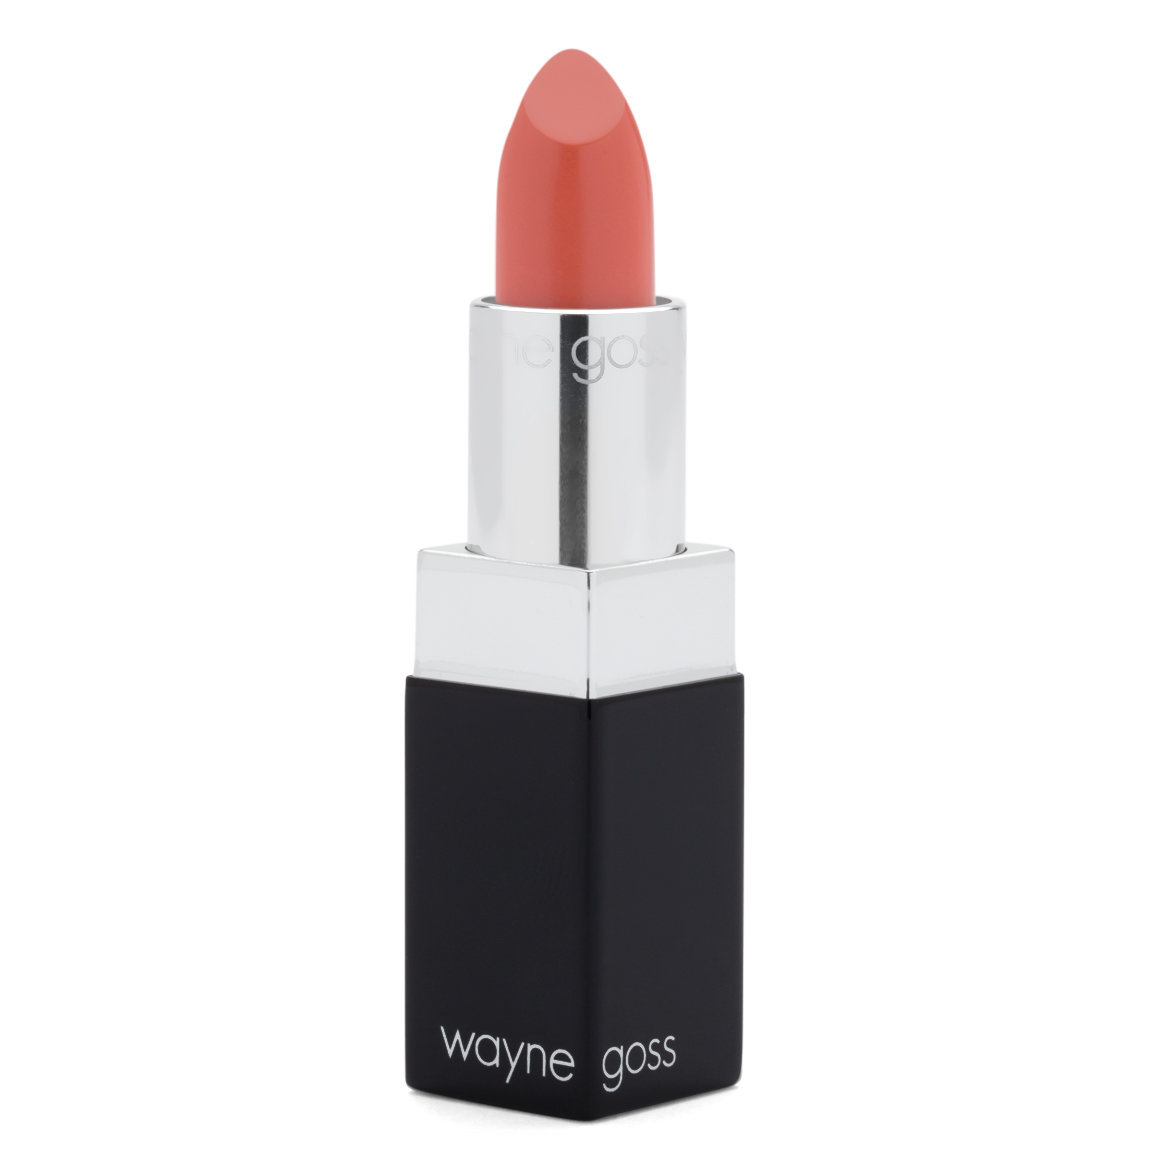 Wayne Goss The Luxury Cream Lipstick Amaryllis alternative view 1.